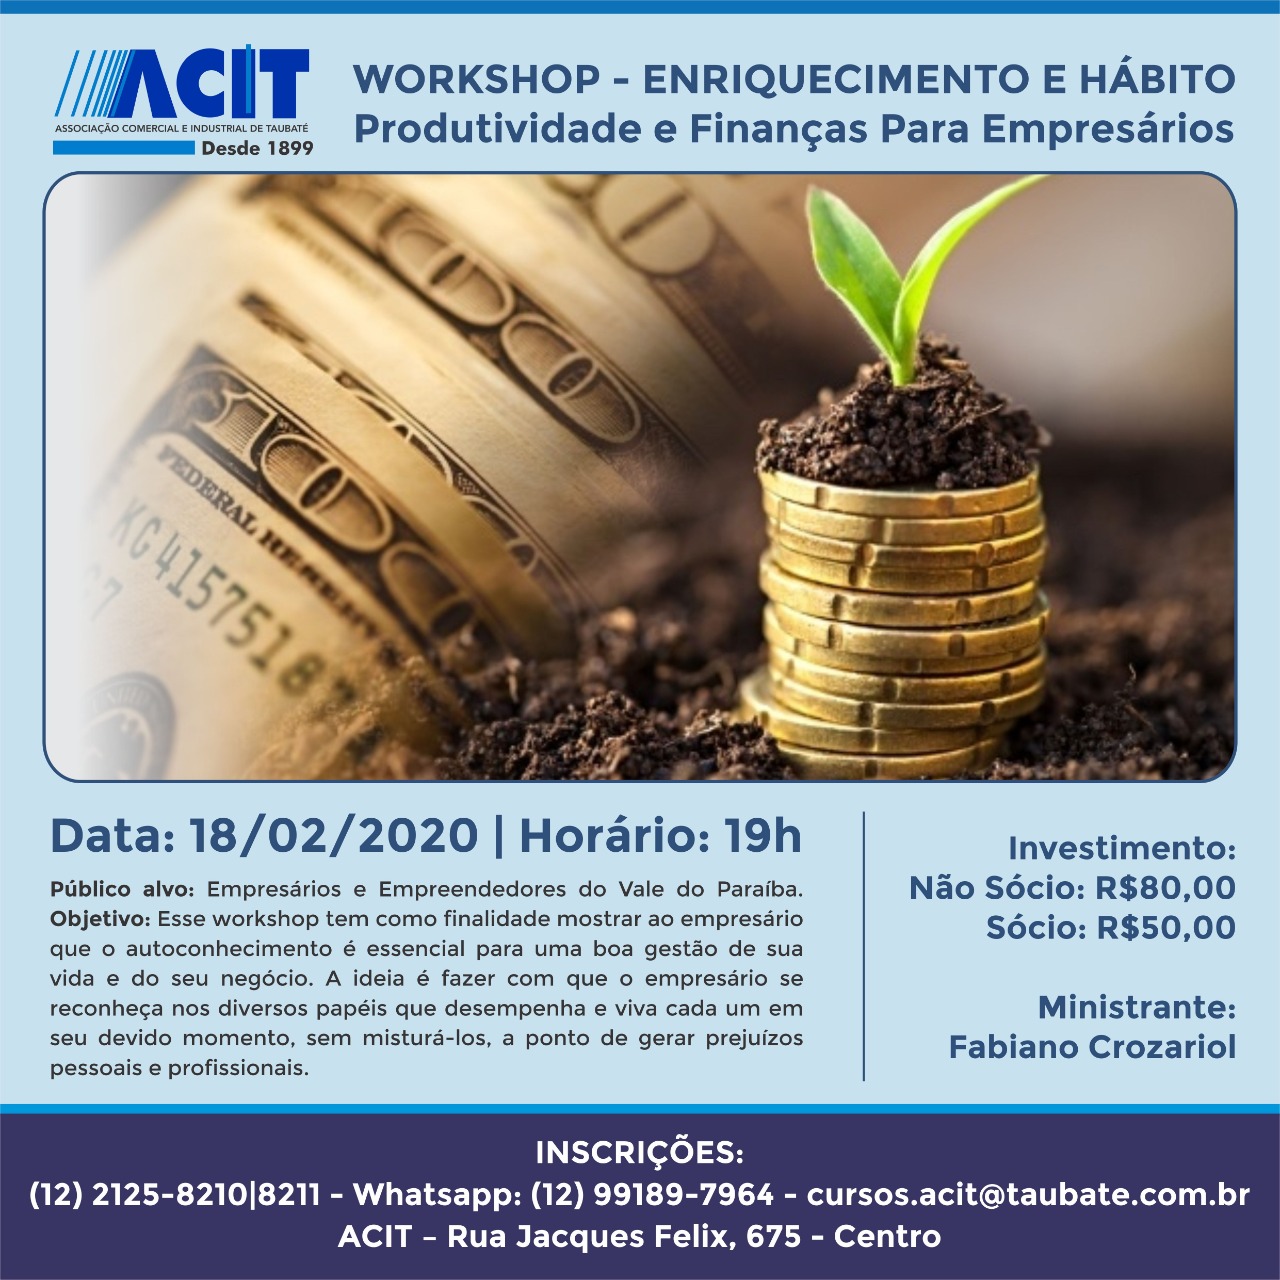 ACIT realiza workshop “Enriquecimento e Hábito”